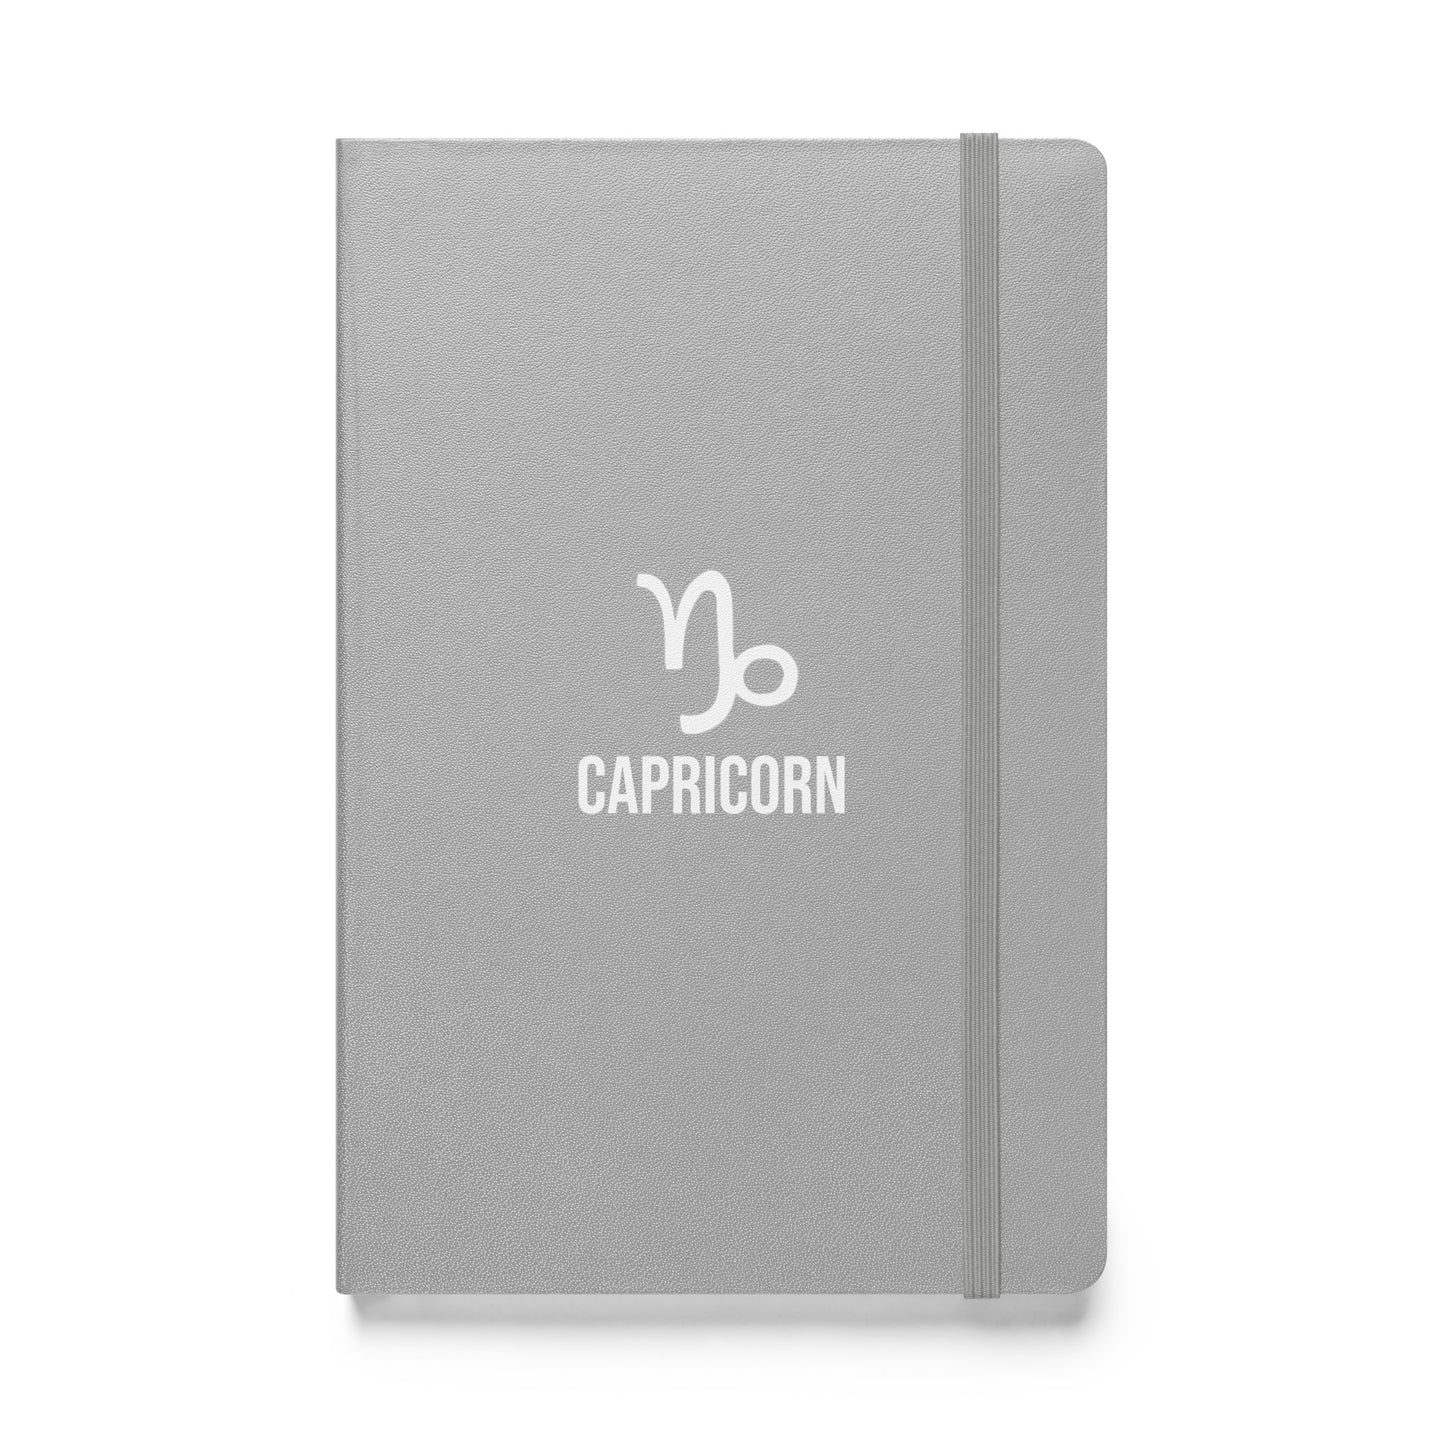 Capricorn Hardcover Notebook